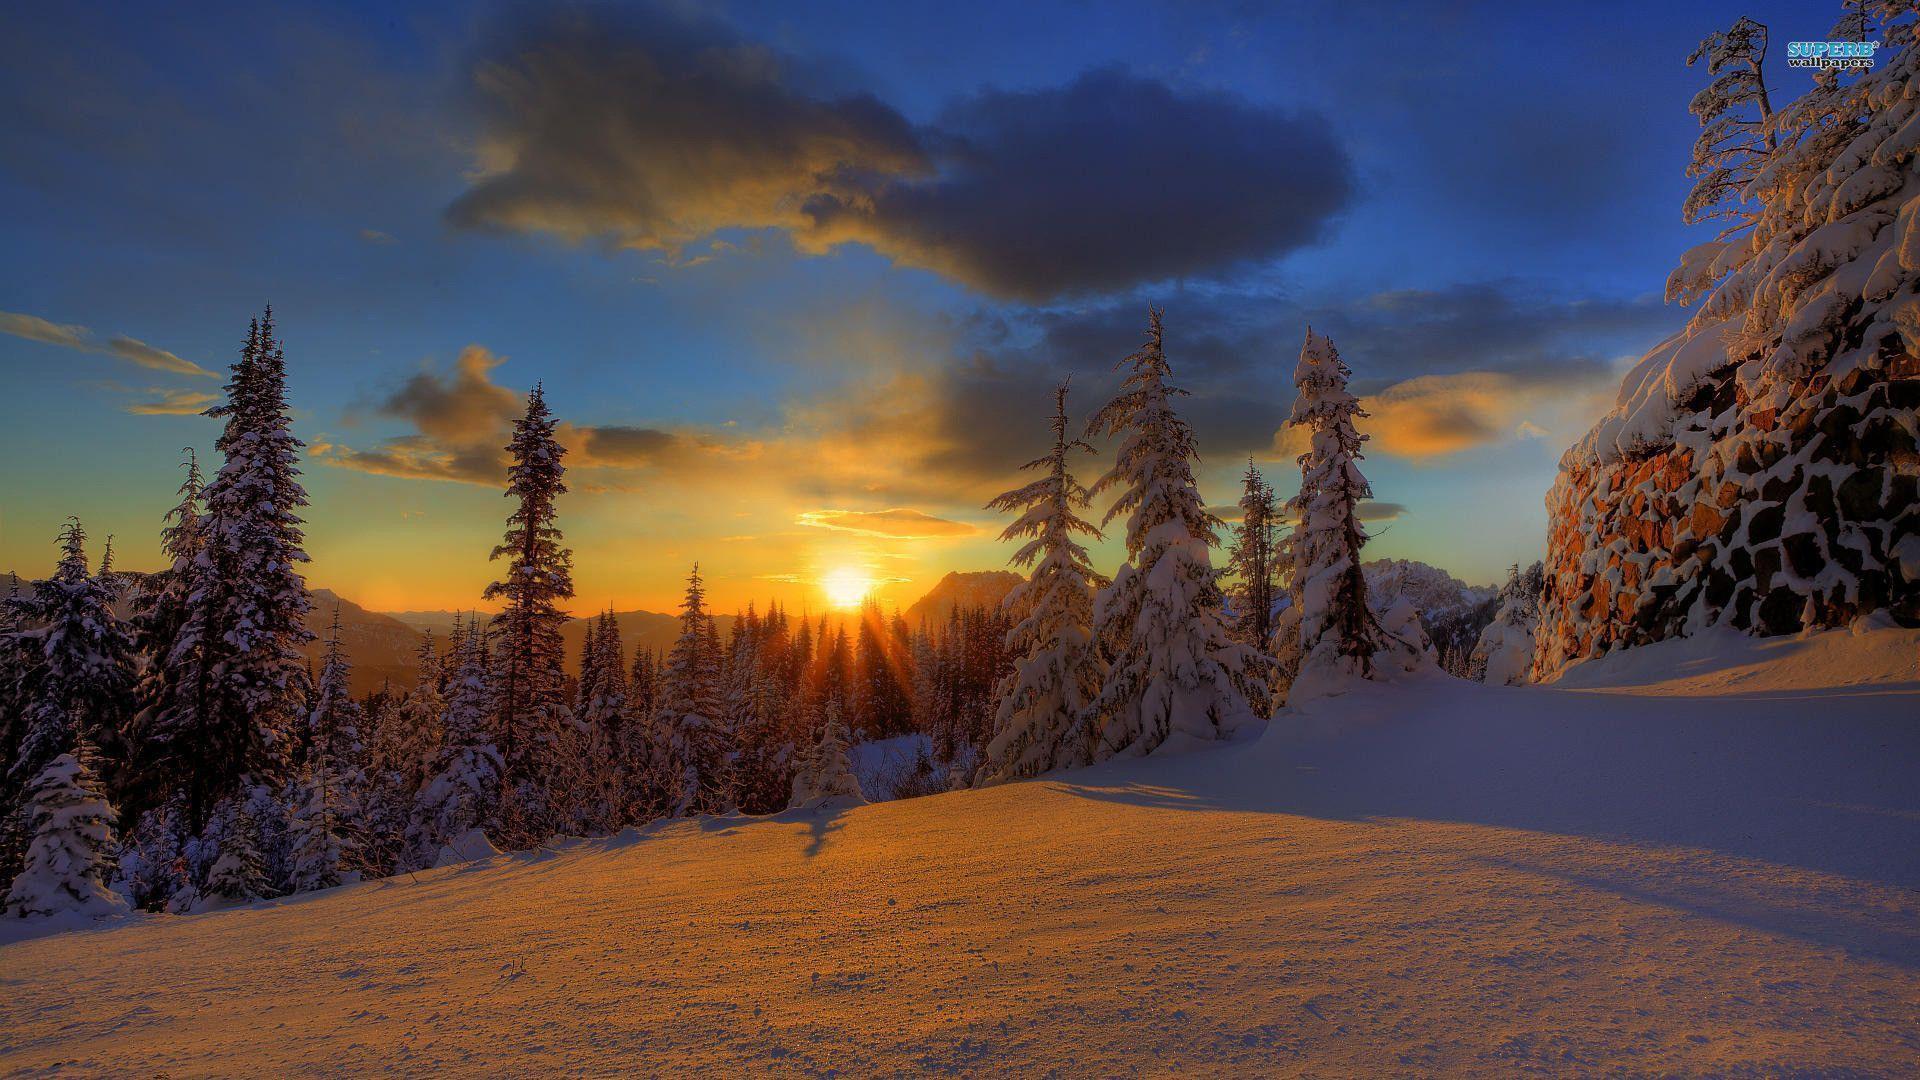 Winter Mountain Sunset Image 6 HD Wallpaper. Hdimges